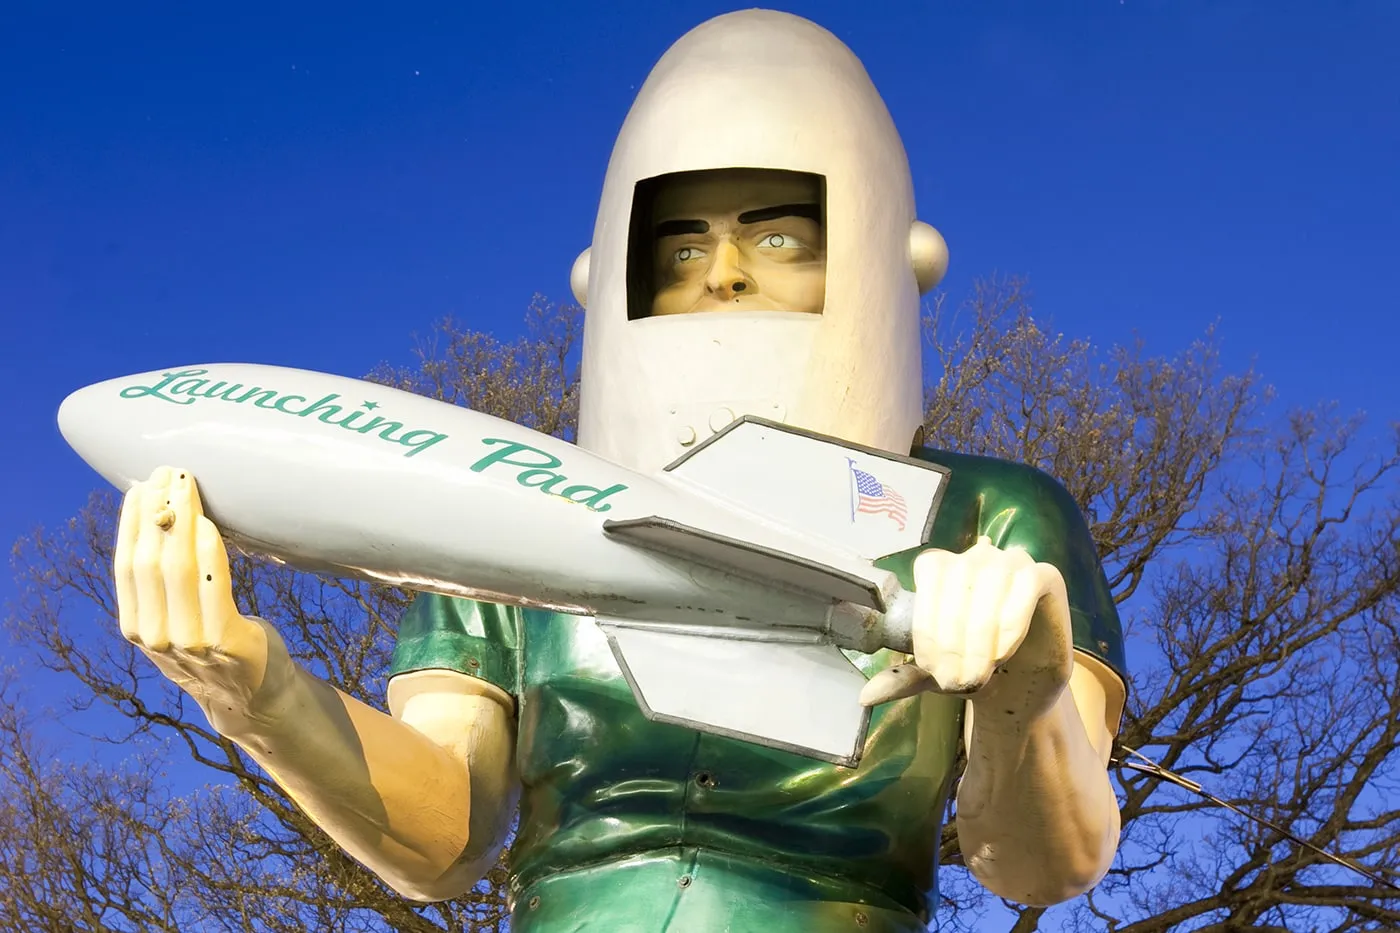 Gemini Giant muffler man at the Launching Pad in Wilmington, Illinois